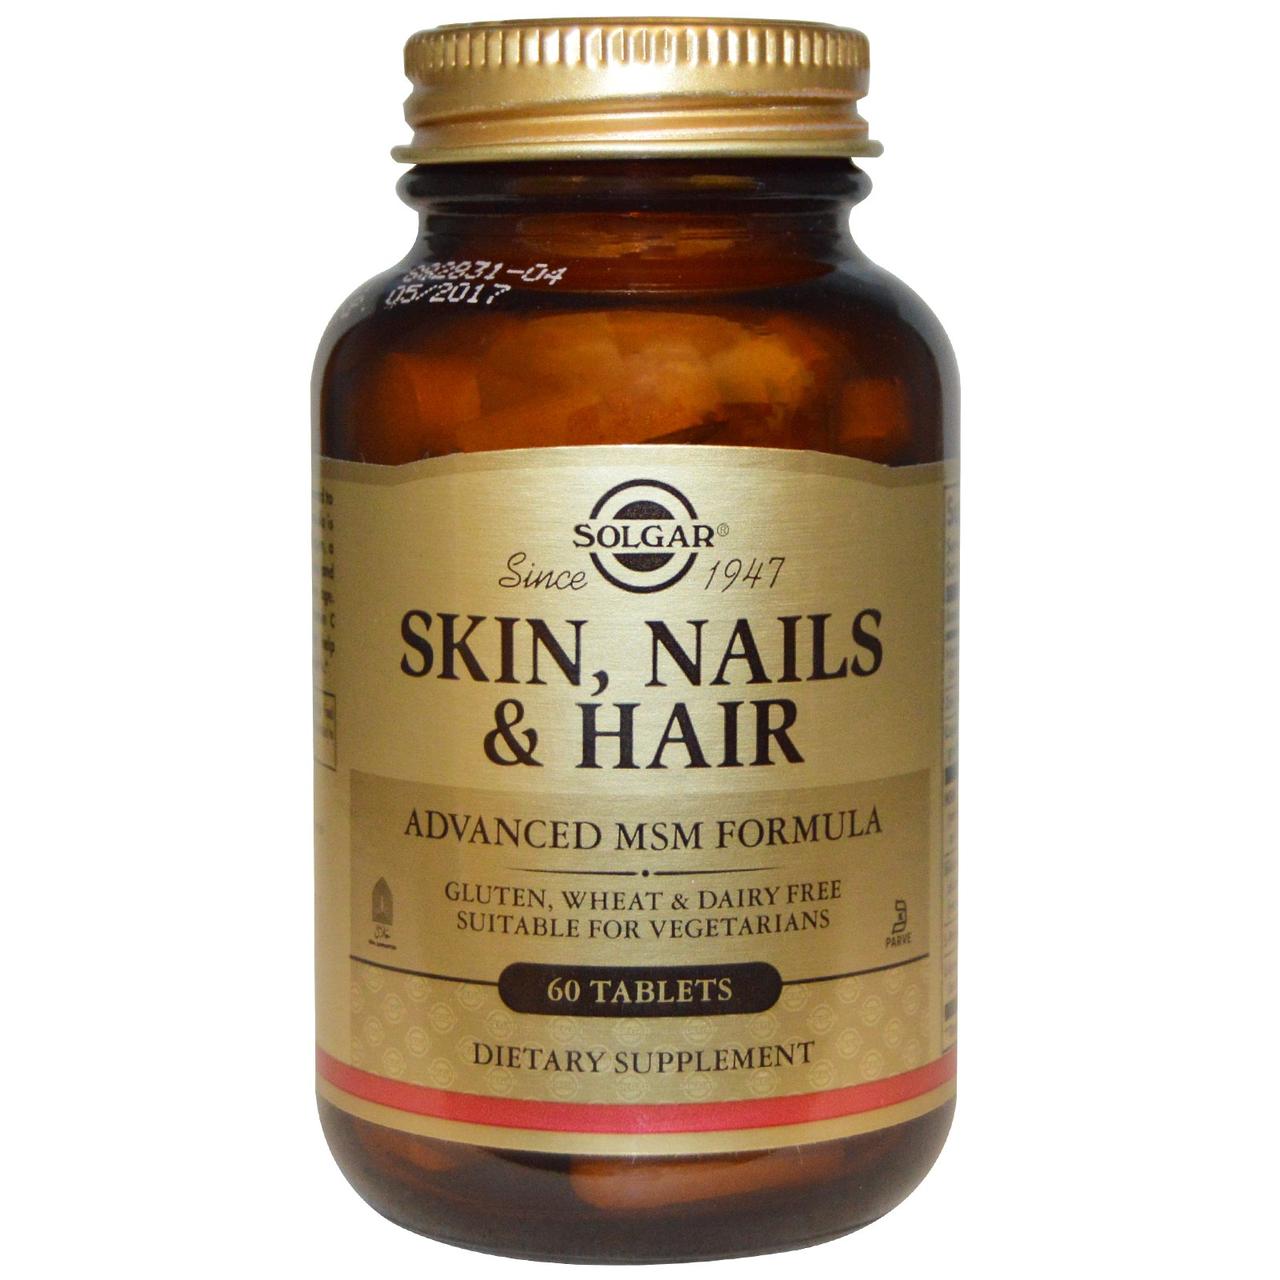 Skin, Nails & Hair, Advanced MSM Formula Solgar 60 tabs,  ml, Solgar. Special supplements. 